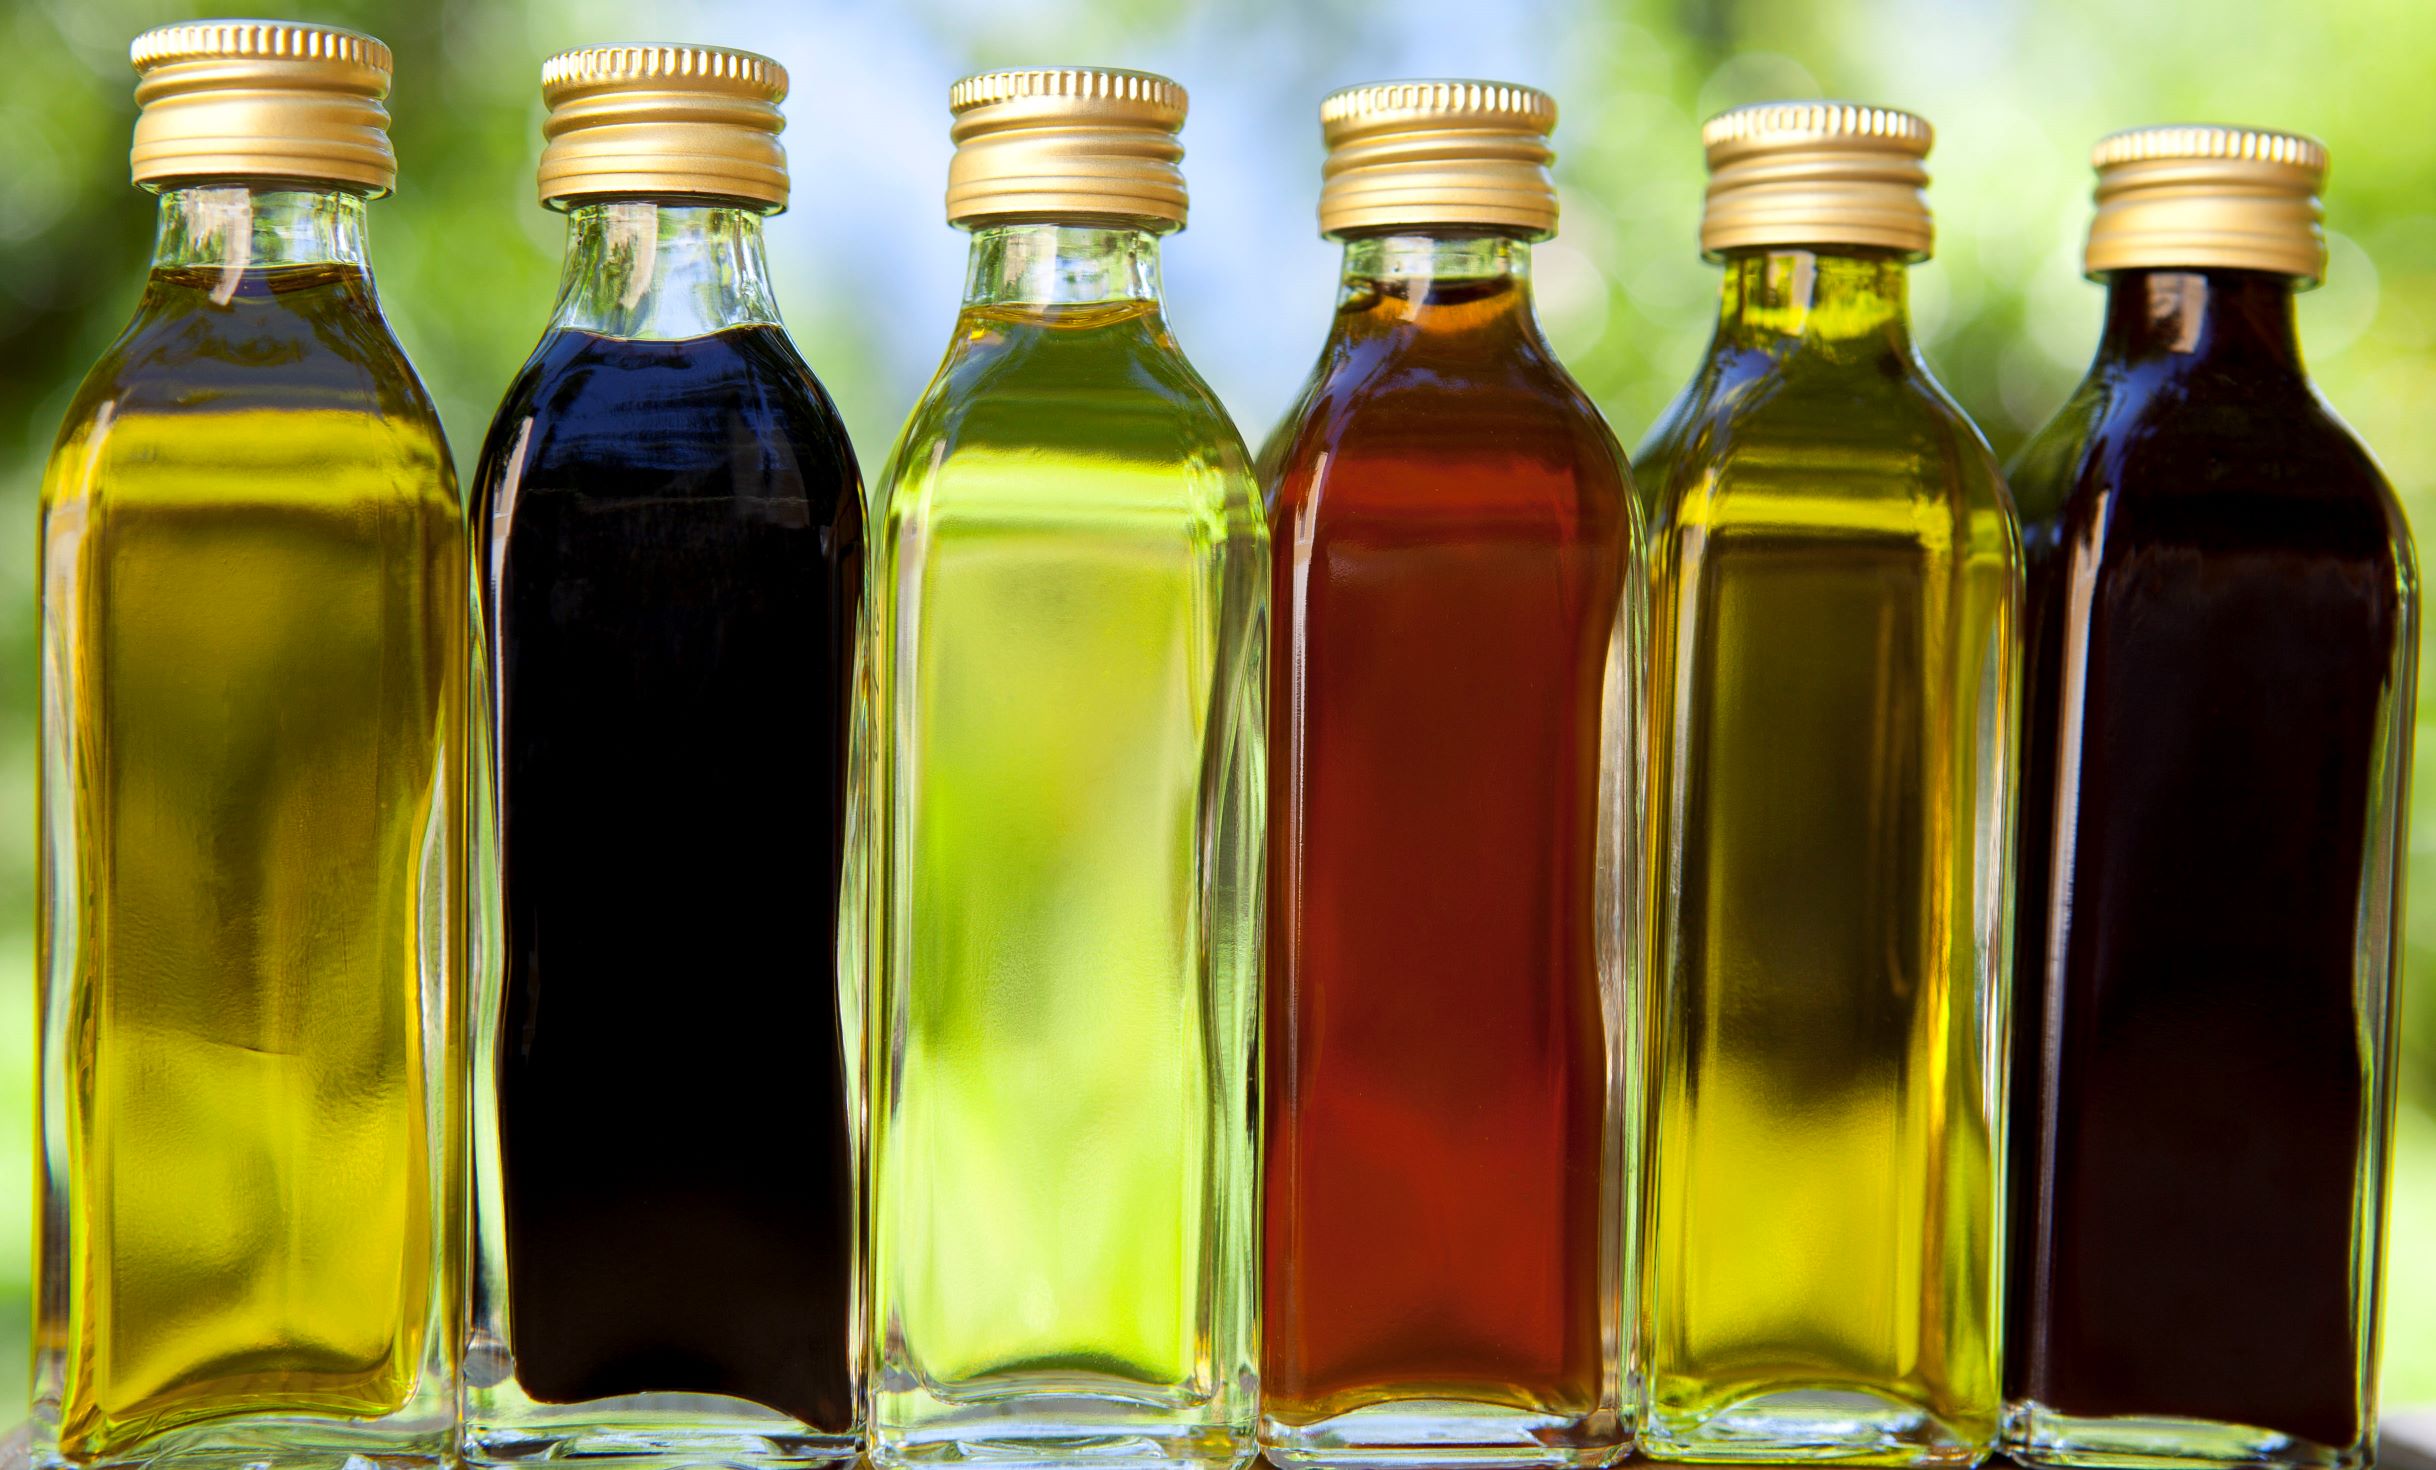 Flavored vinegars in clear bottles